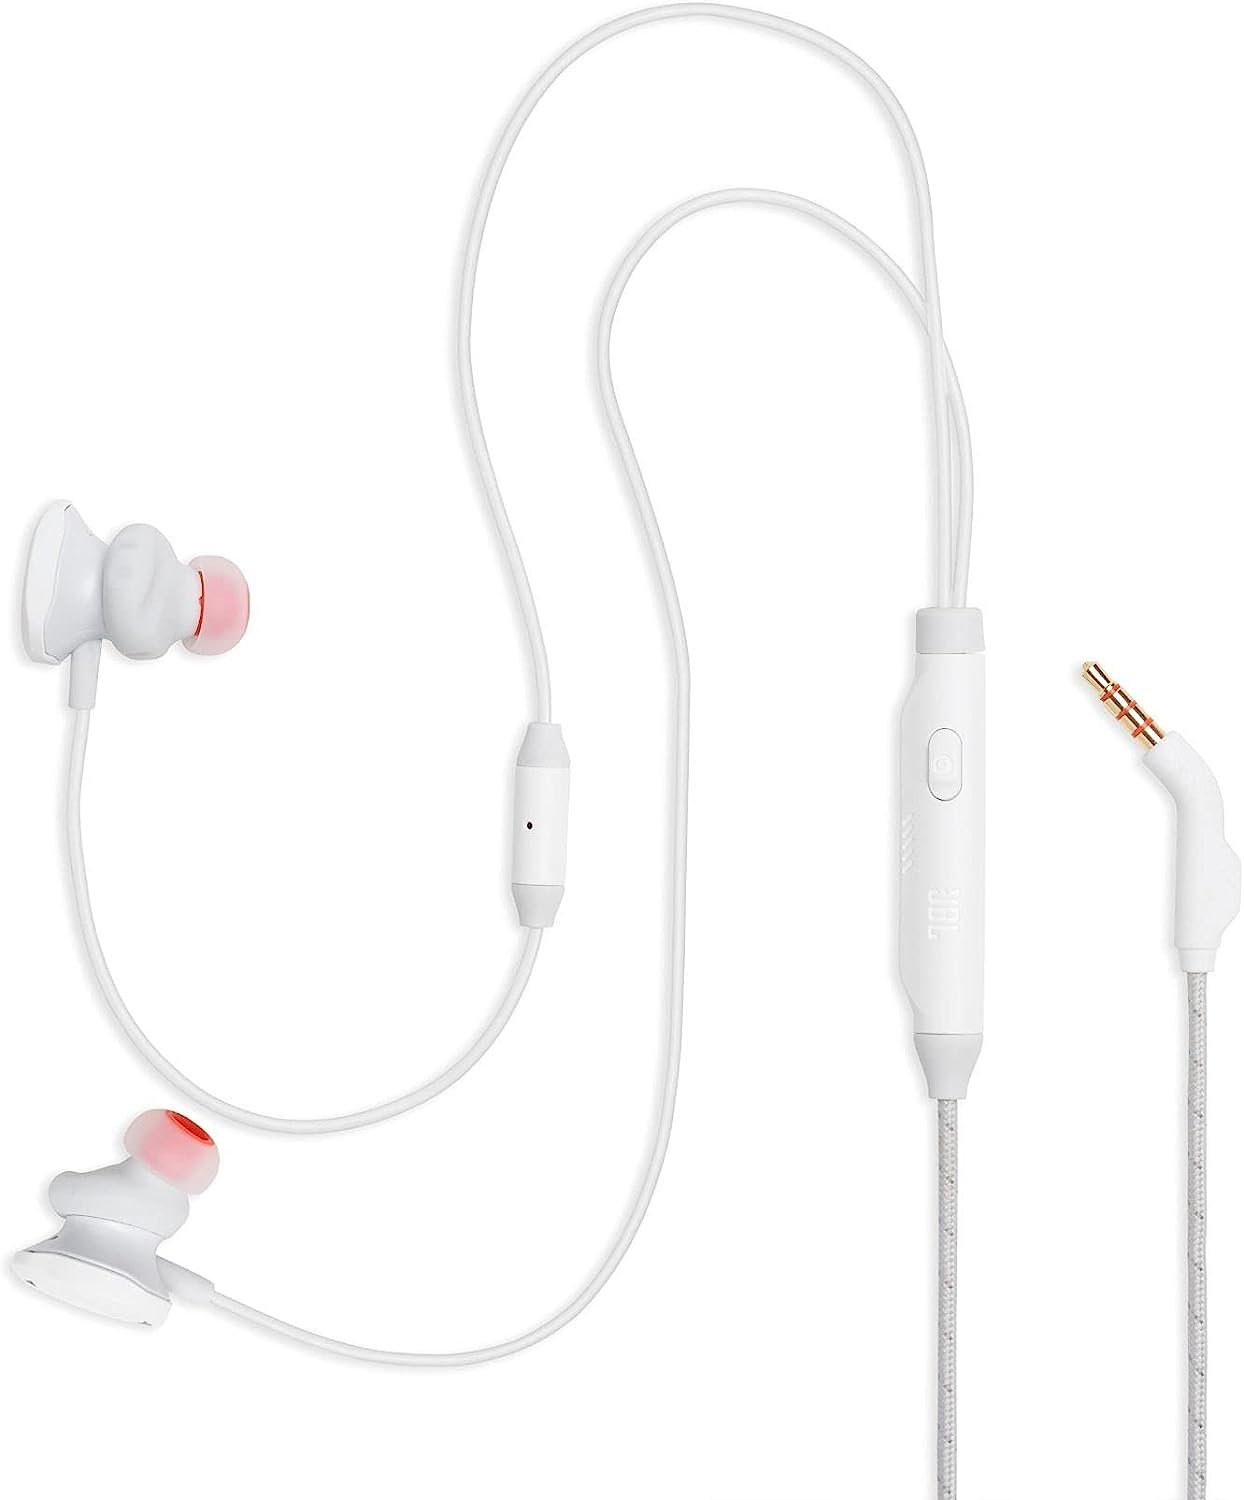 JBL JBLQUANTUM50WAM-Z Quantum 50 Wired In-Ear Gaming Headphones White - Certified Refurbished